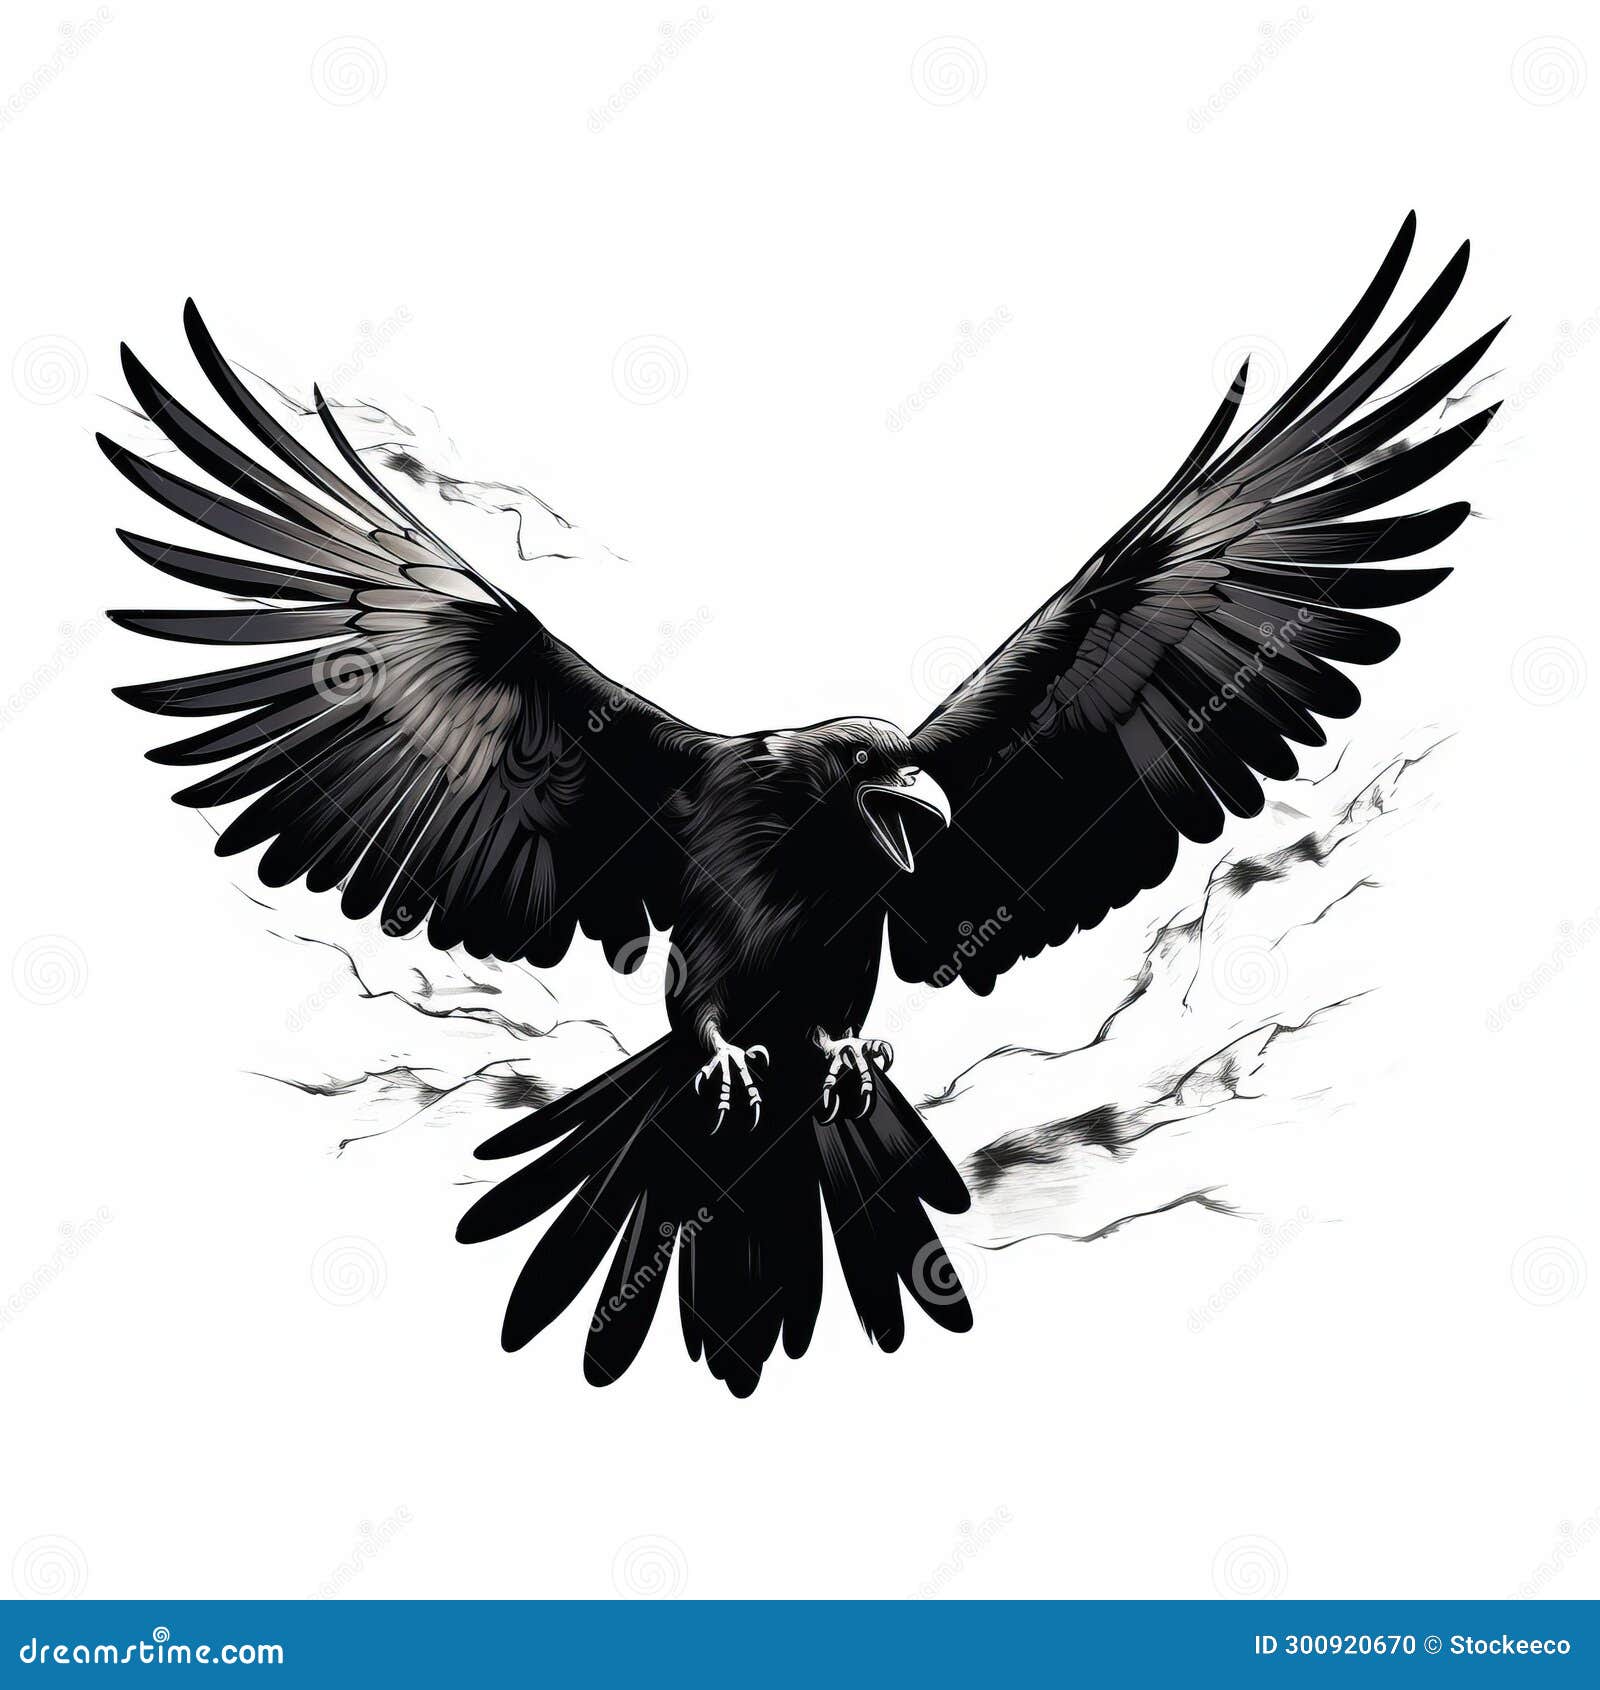 blackbird silhouettes for tattoo | tattoo | Pinterest | Black bird,  Silhouette, Tattoos